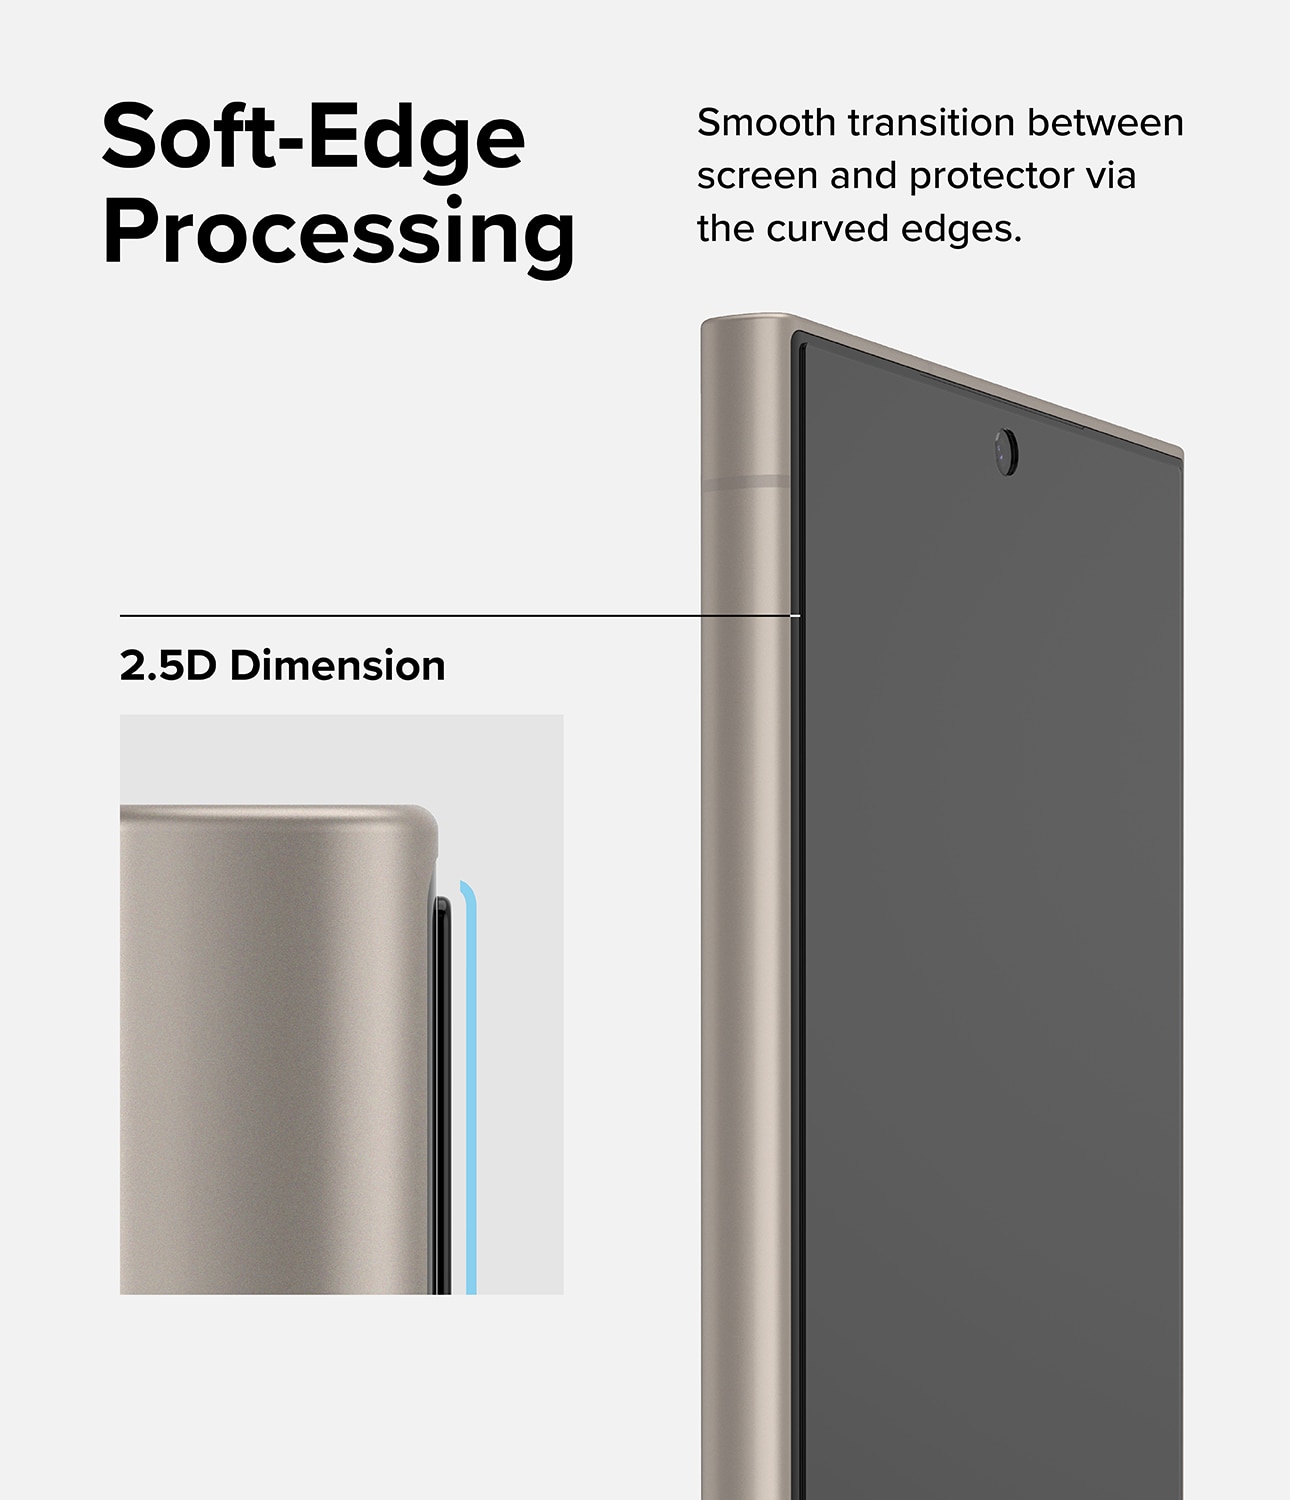 Easy Slide Glass (2 pezzi) Samsung Galaxy S24 Ultra